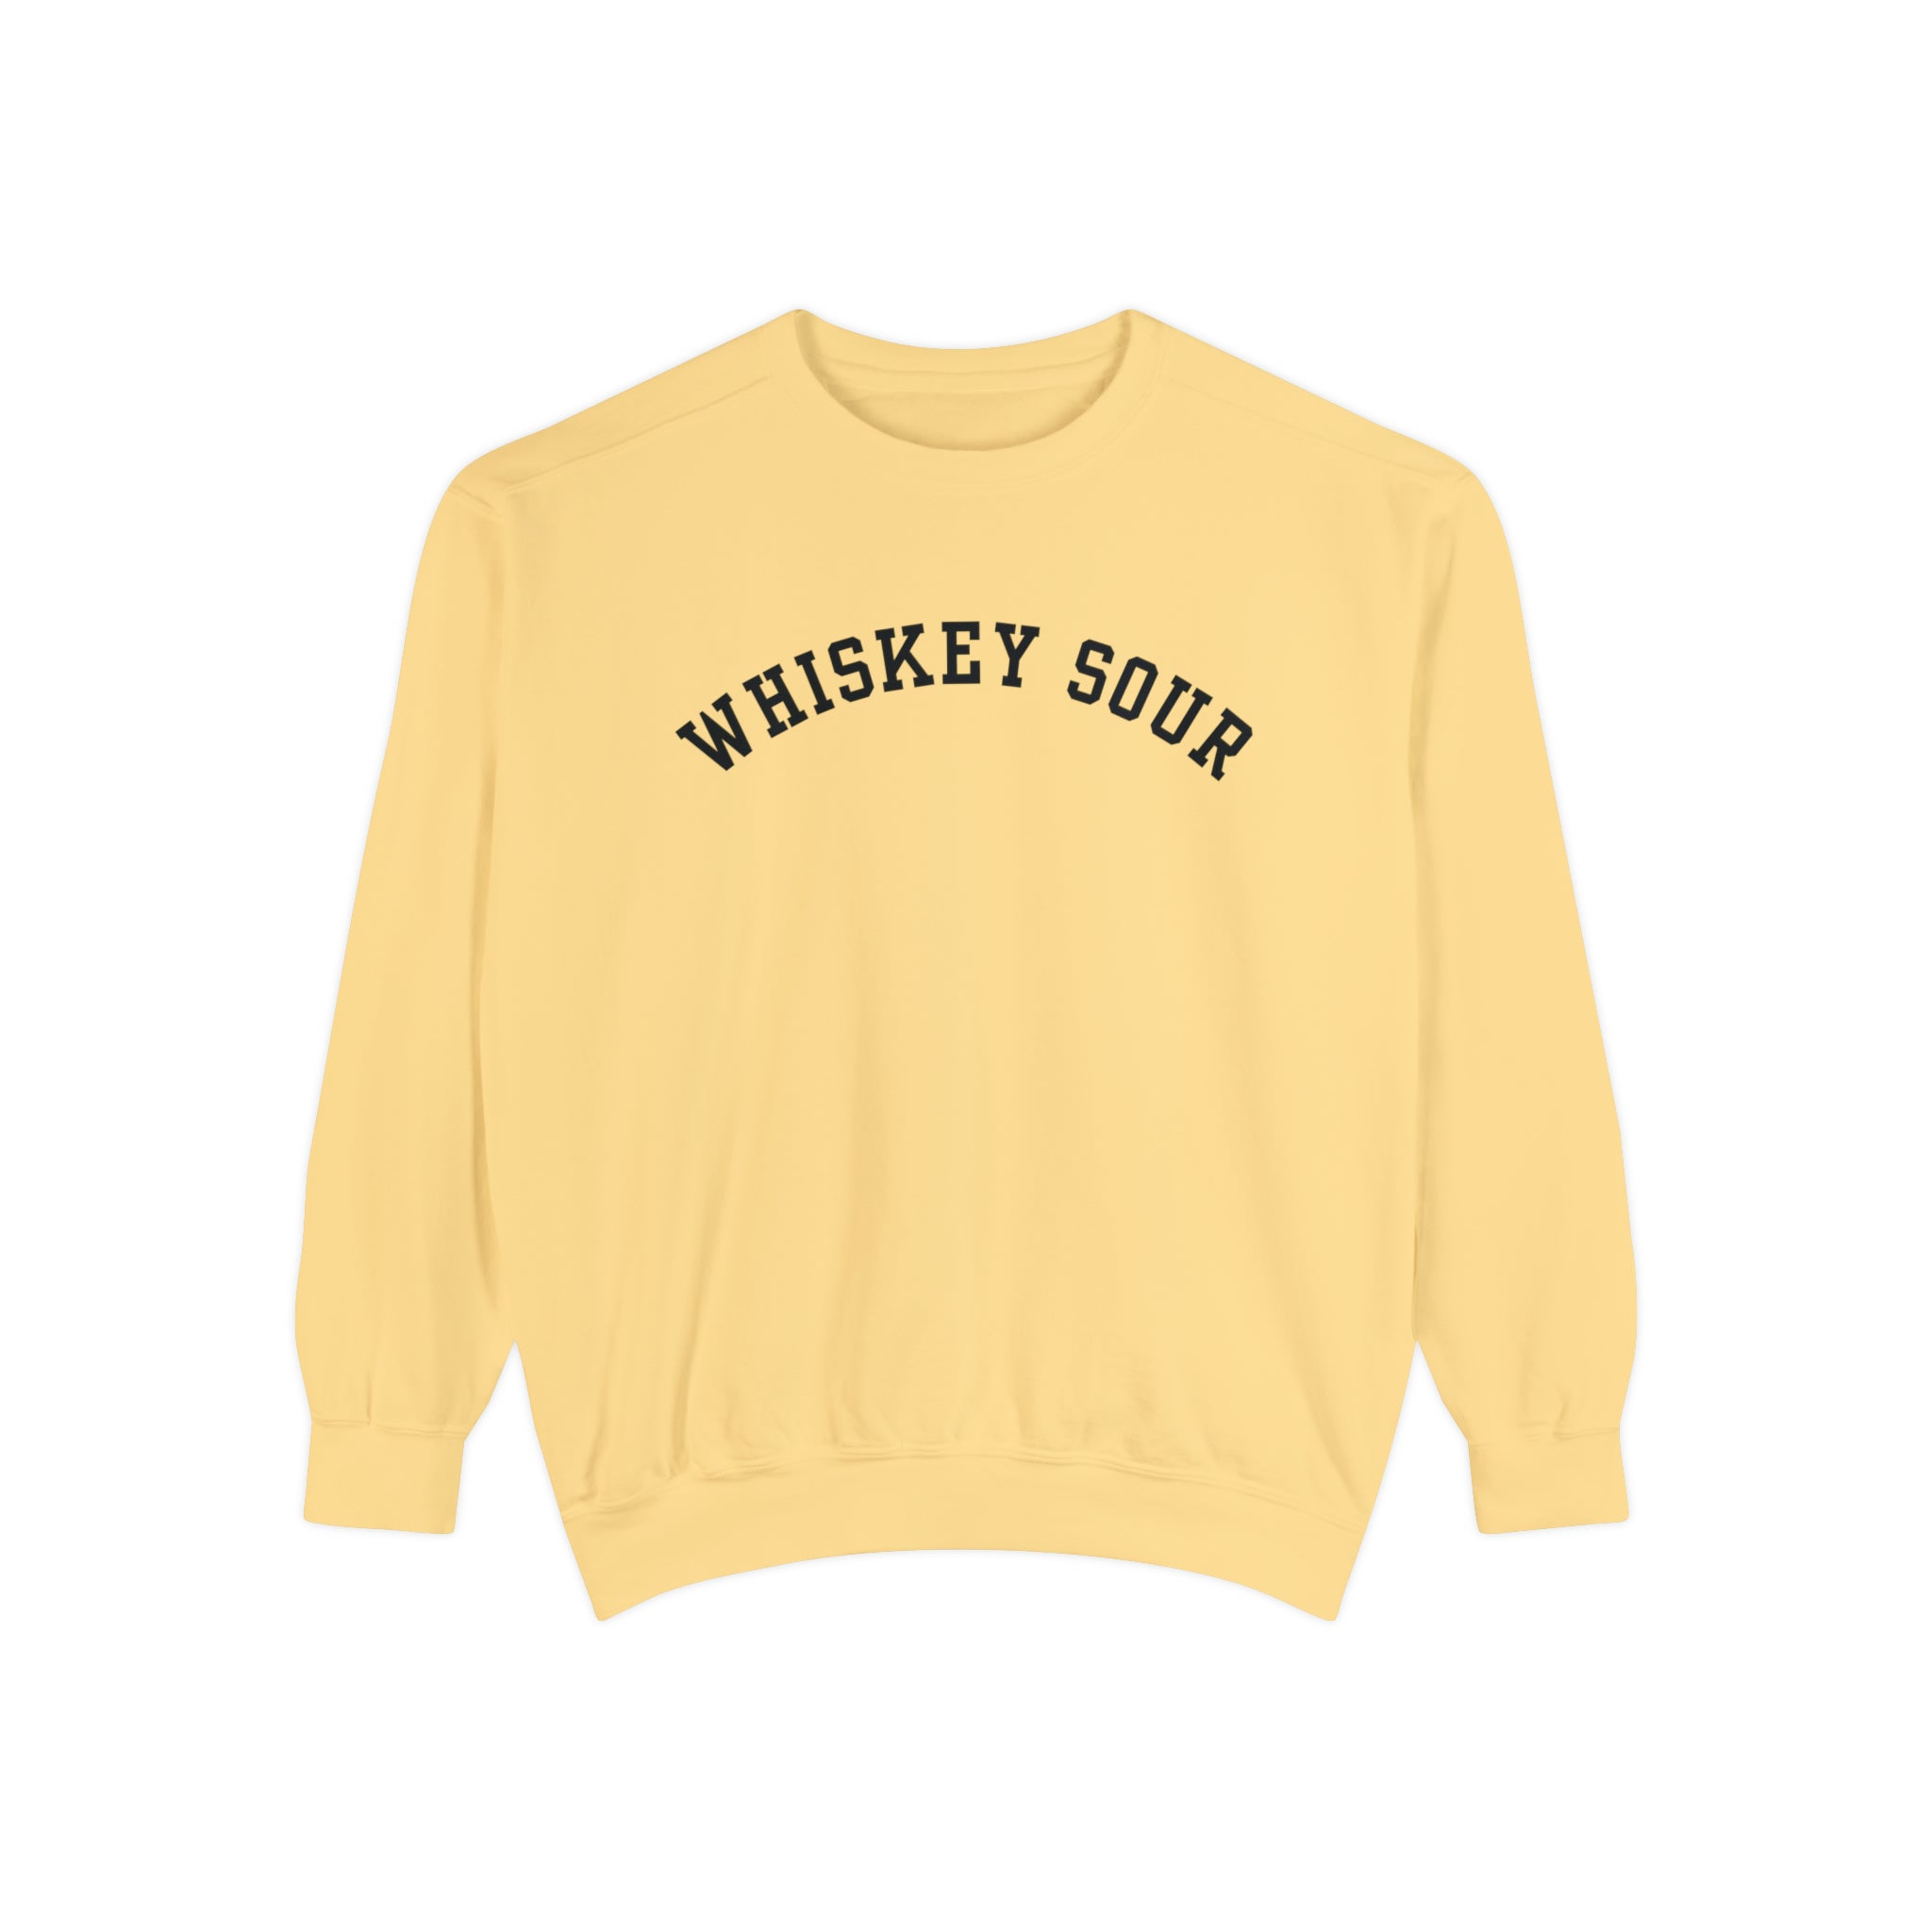 Whiskey Sour Comfort Colors Crewneck Sweatshirt